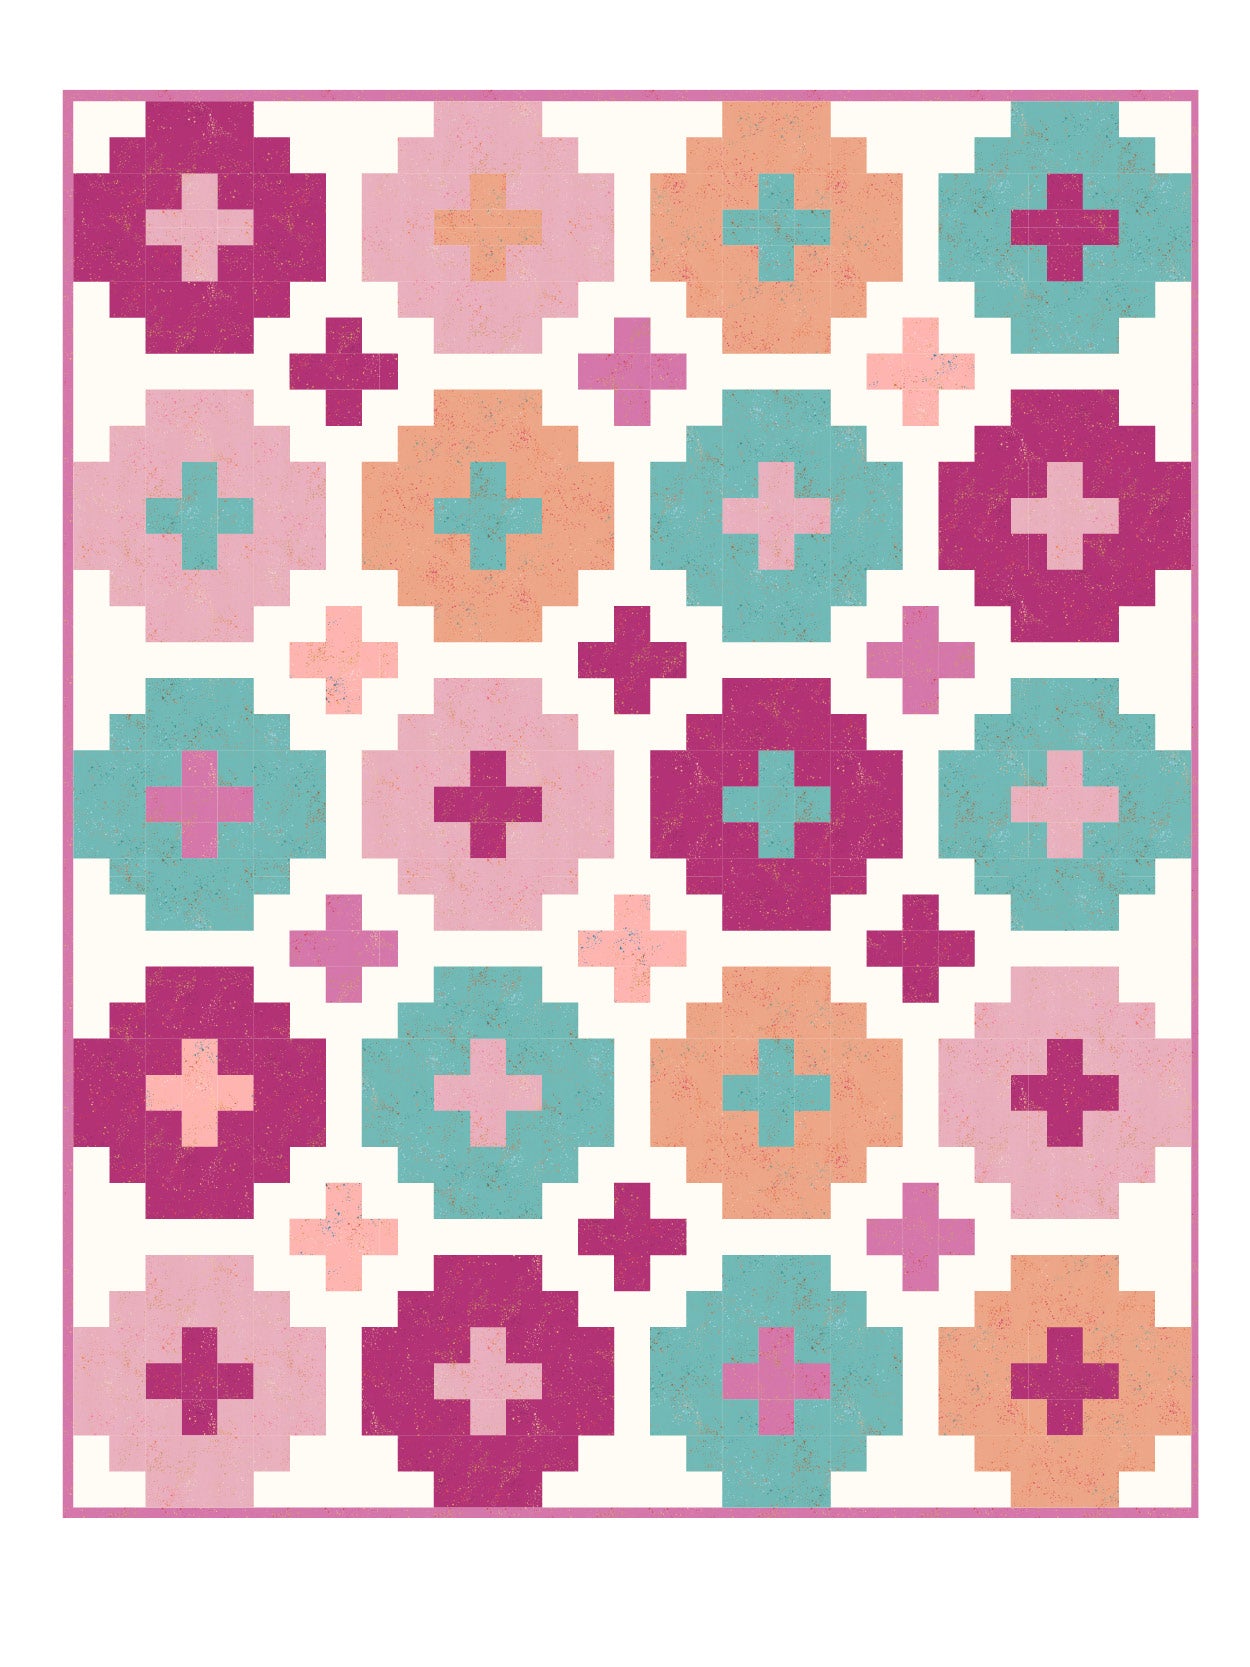 Cross Tile PDF Quilt Pattern